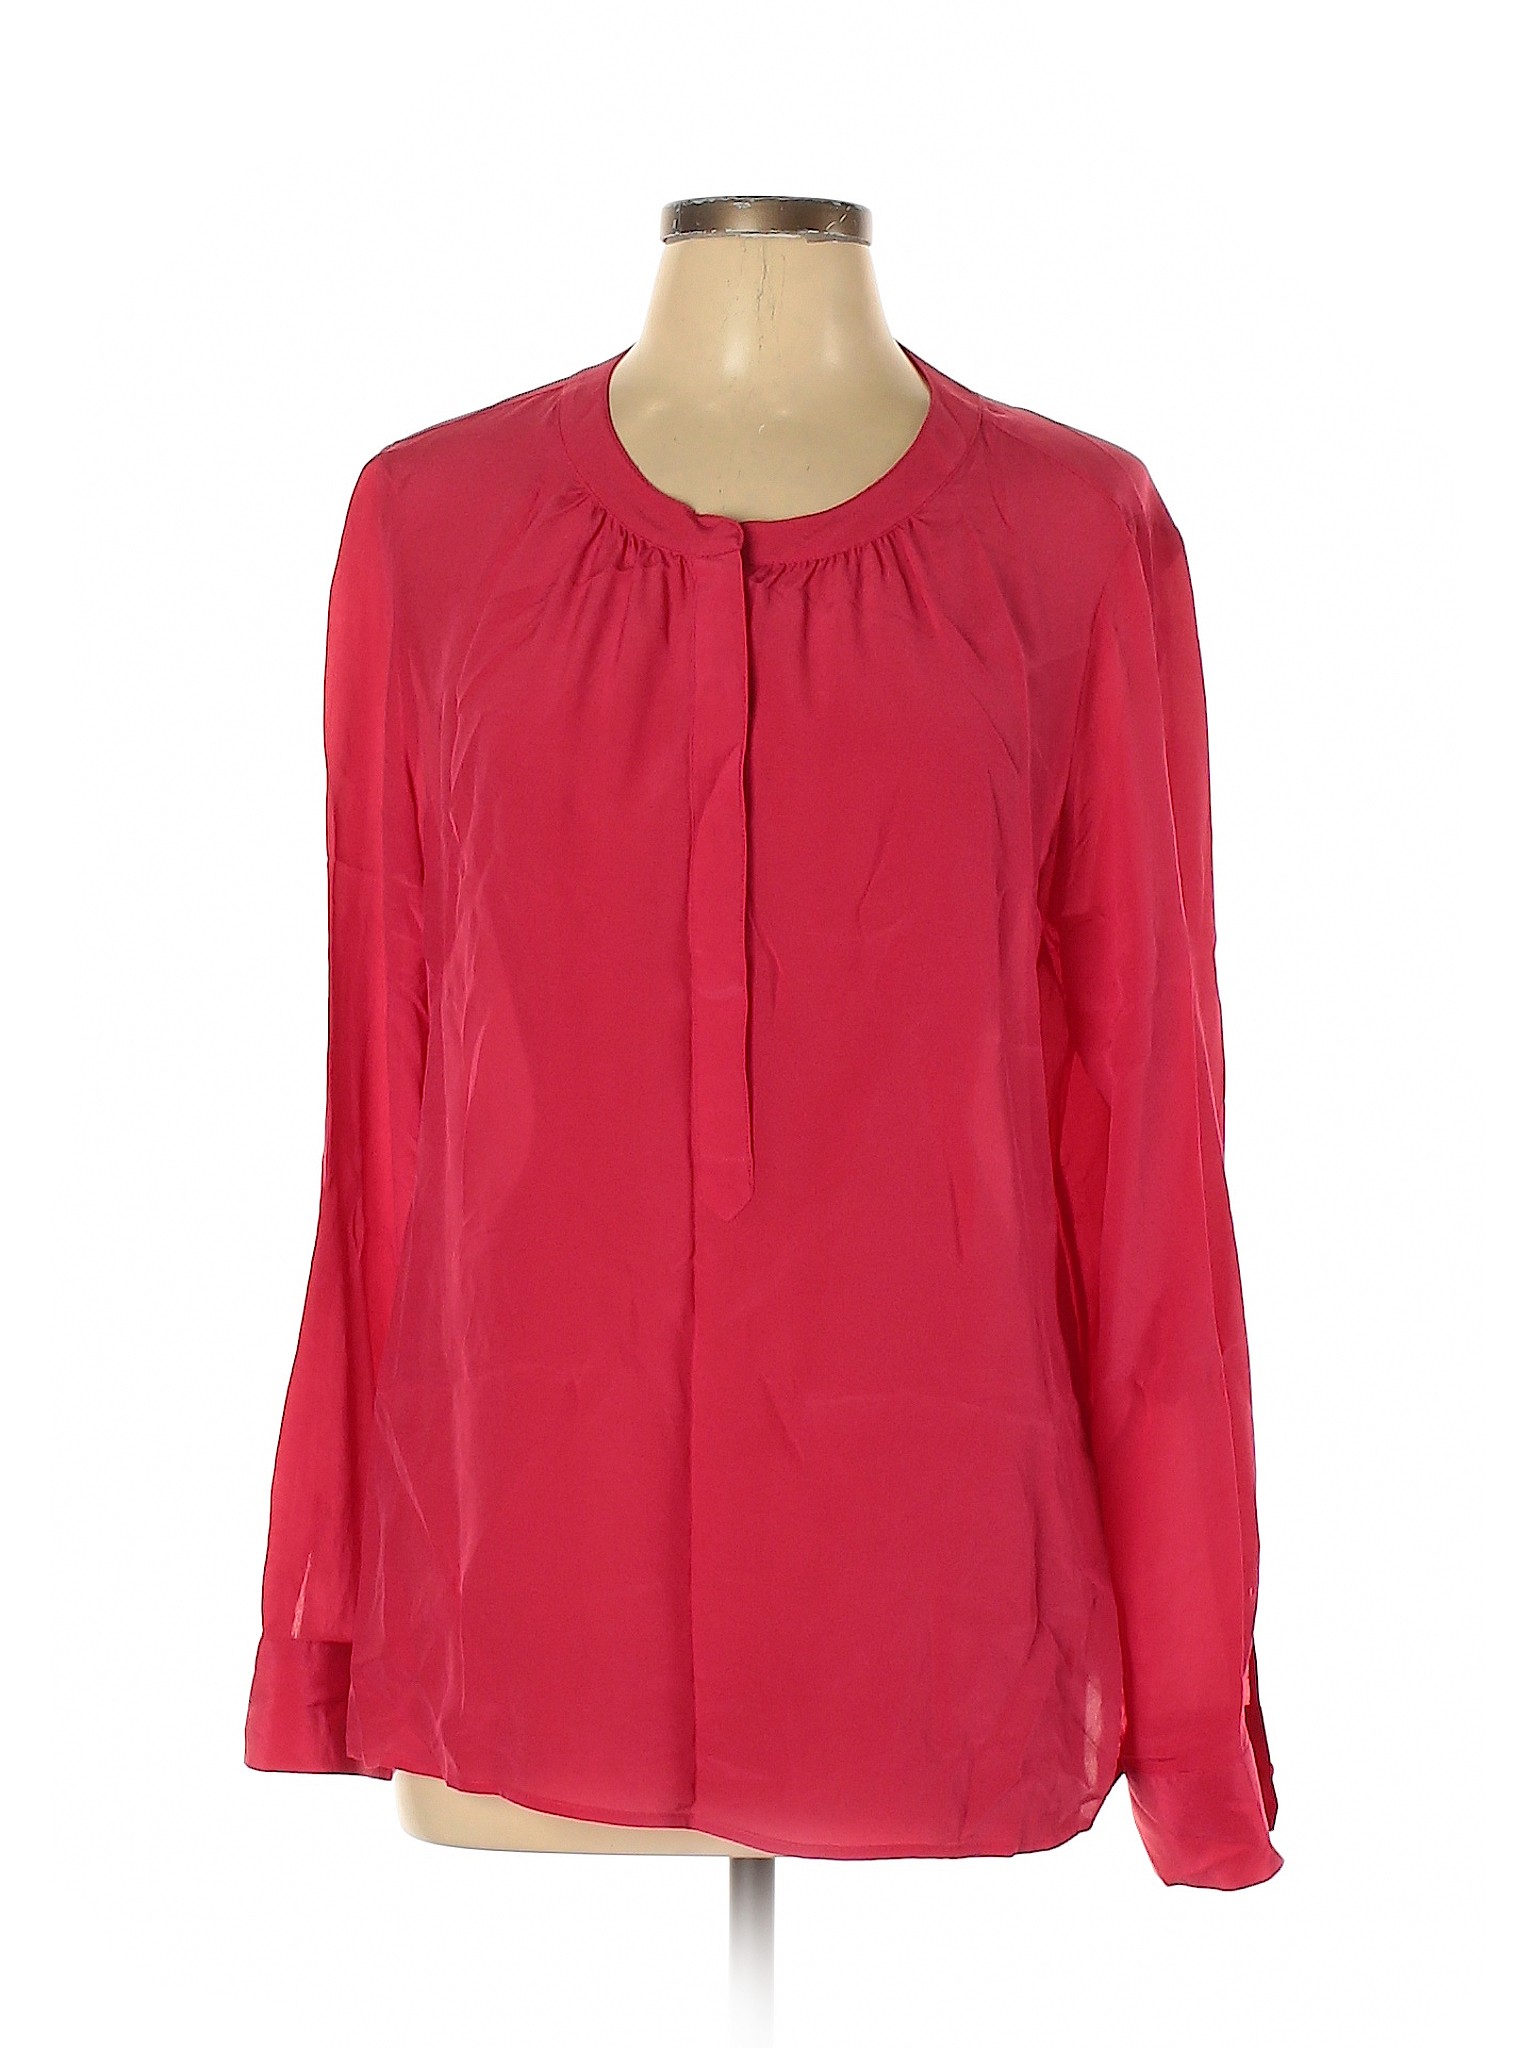 Banana Republic Women Red Long Sleeve Silk Top L | eBay